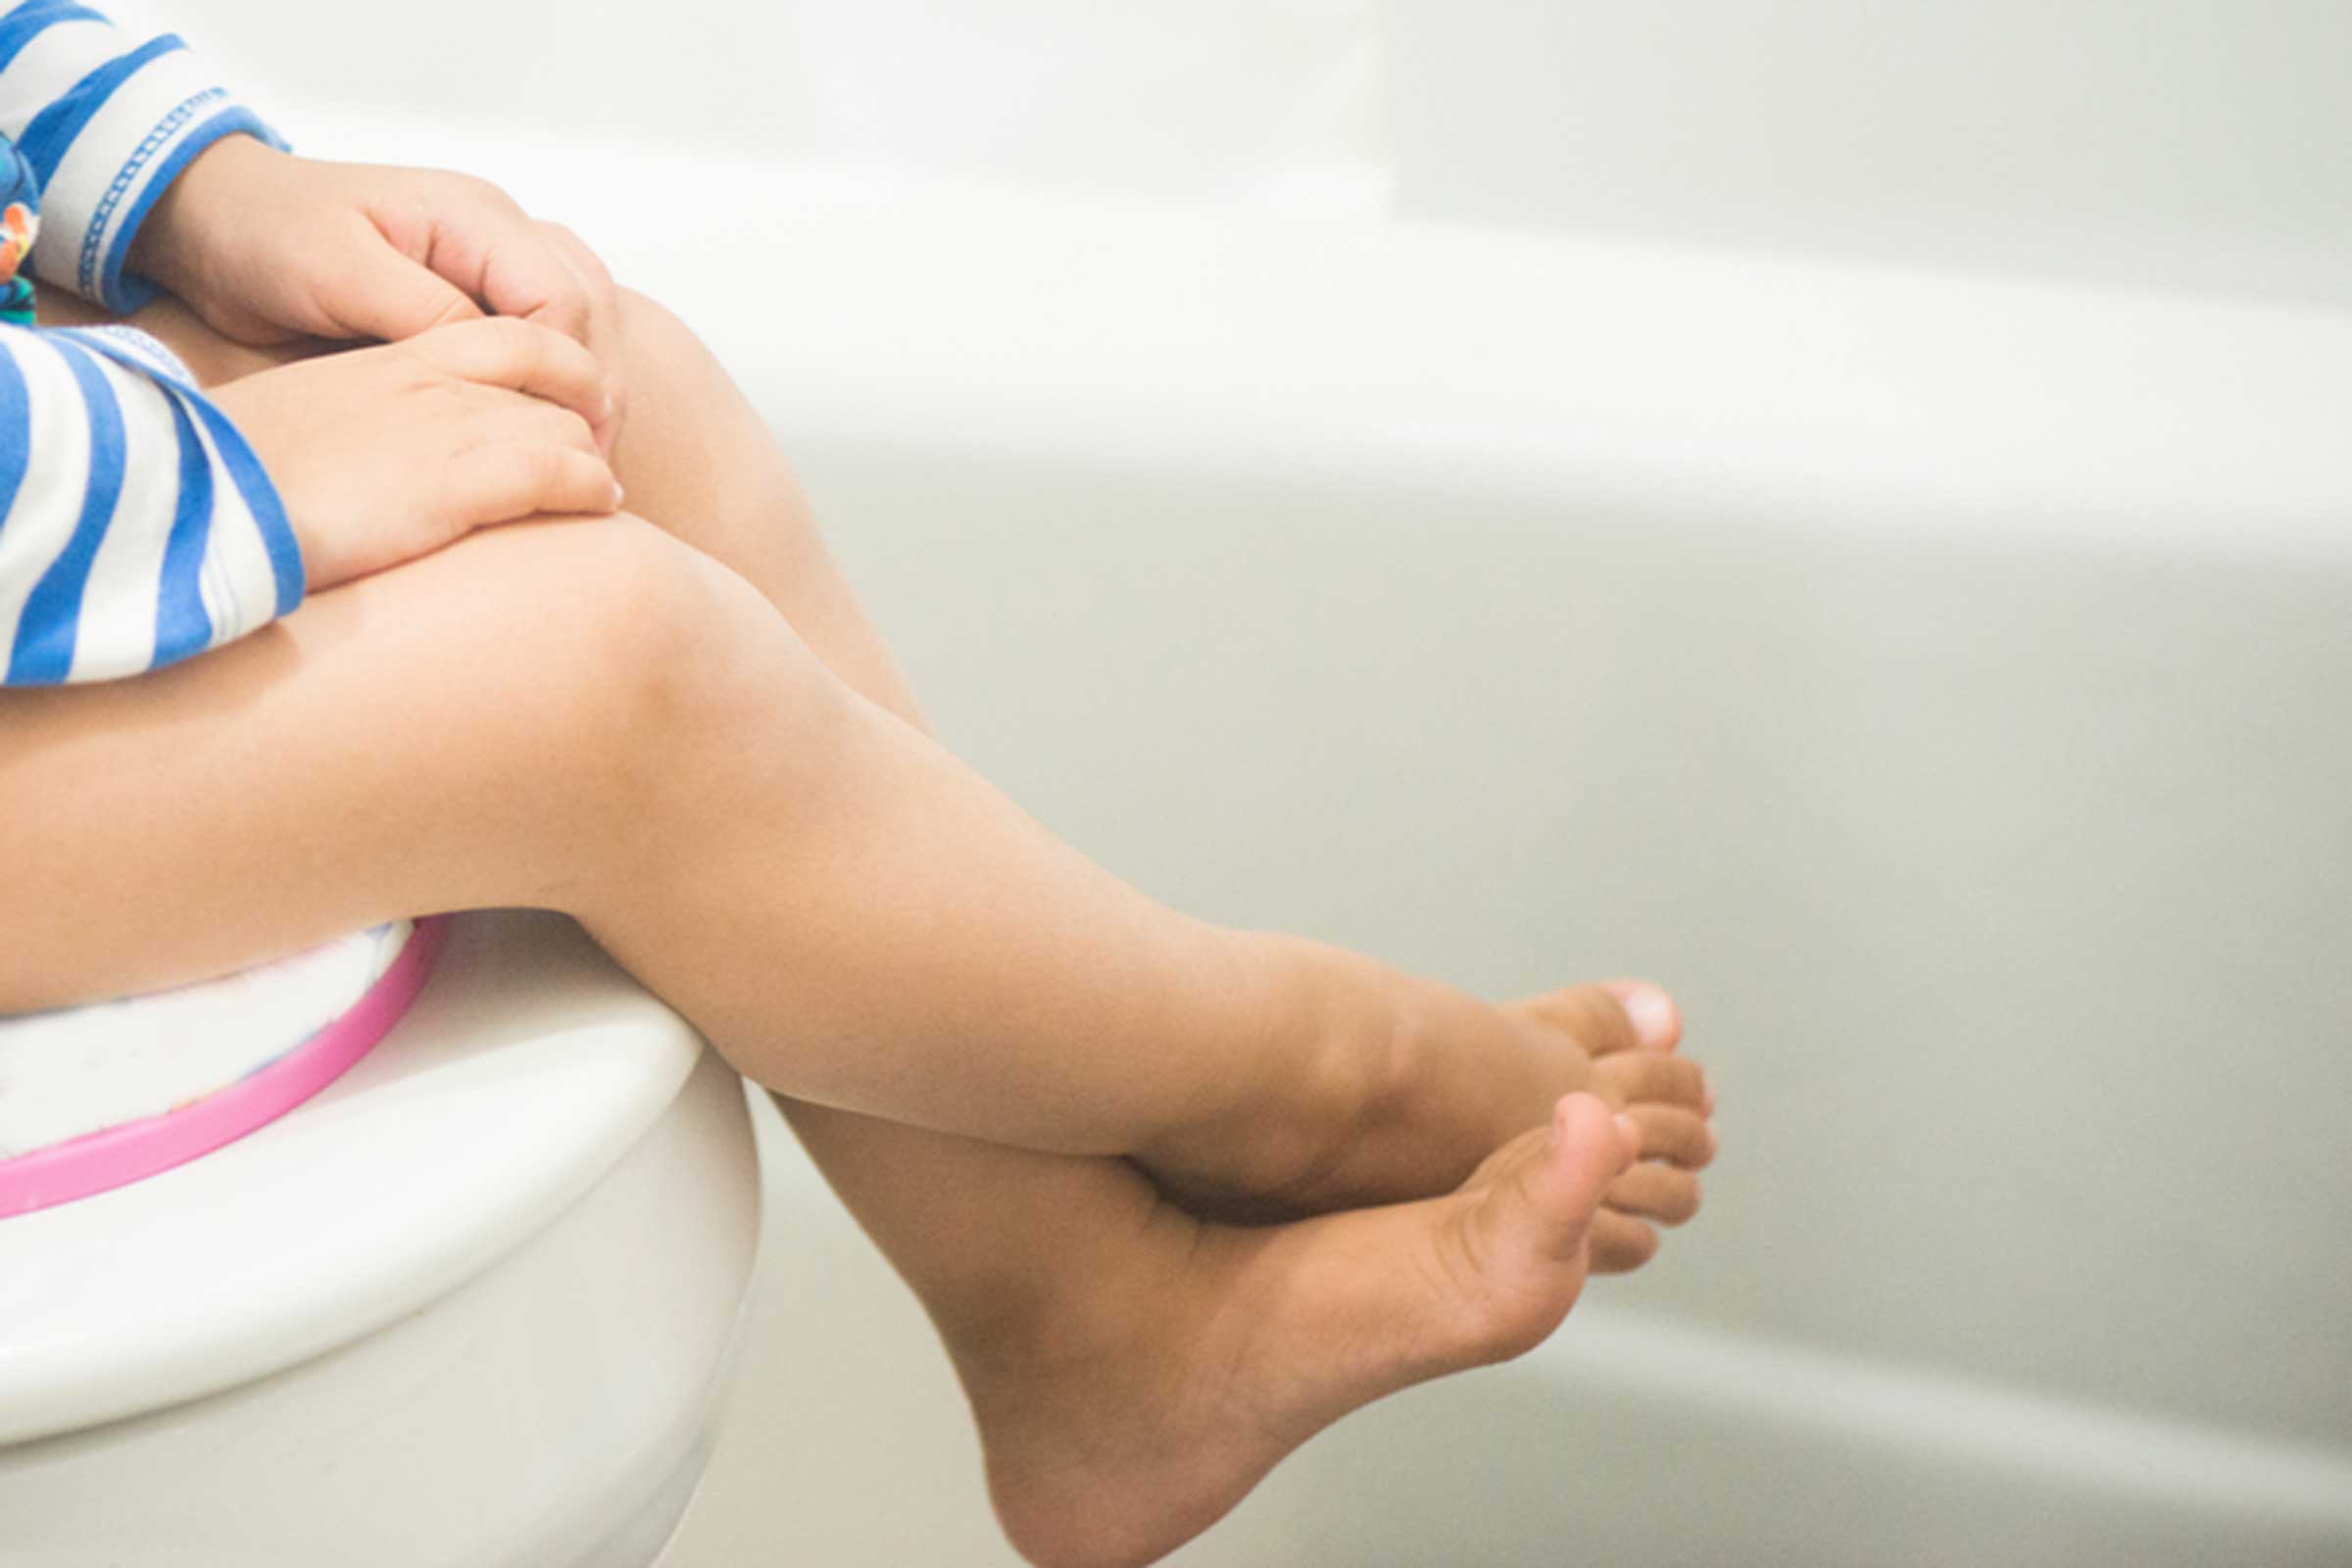 Pedoman Latihan Menggunakan Toilet untuk Anak Usia 4 Tahun